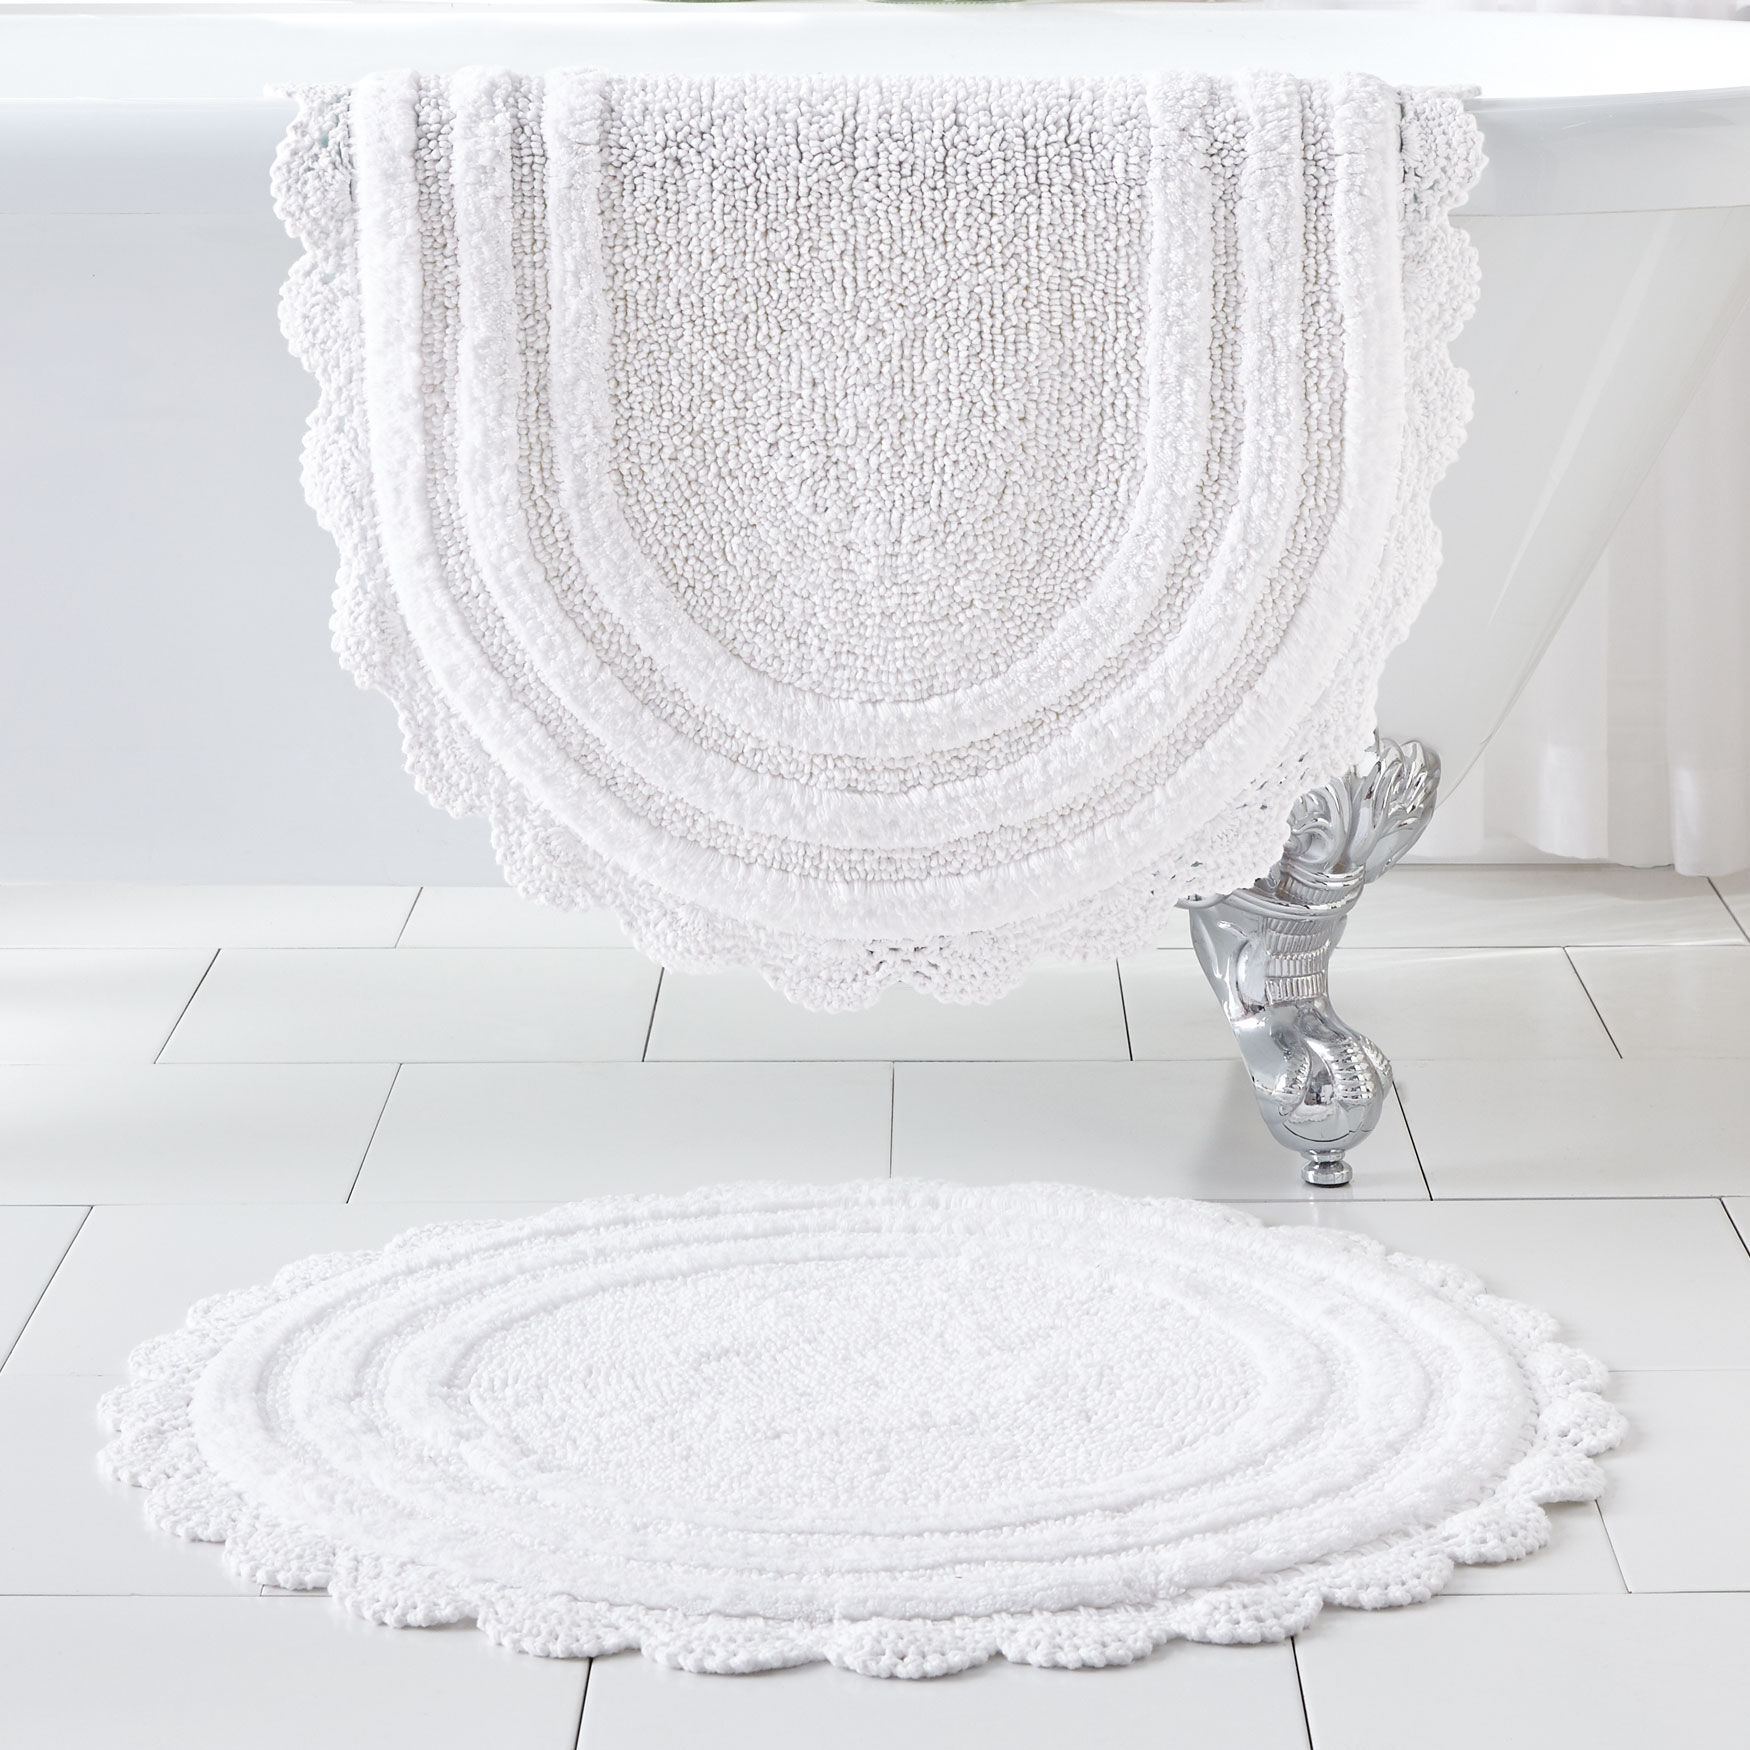 oval bath mat